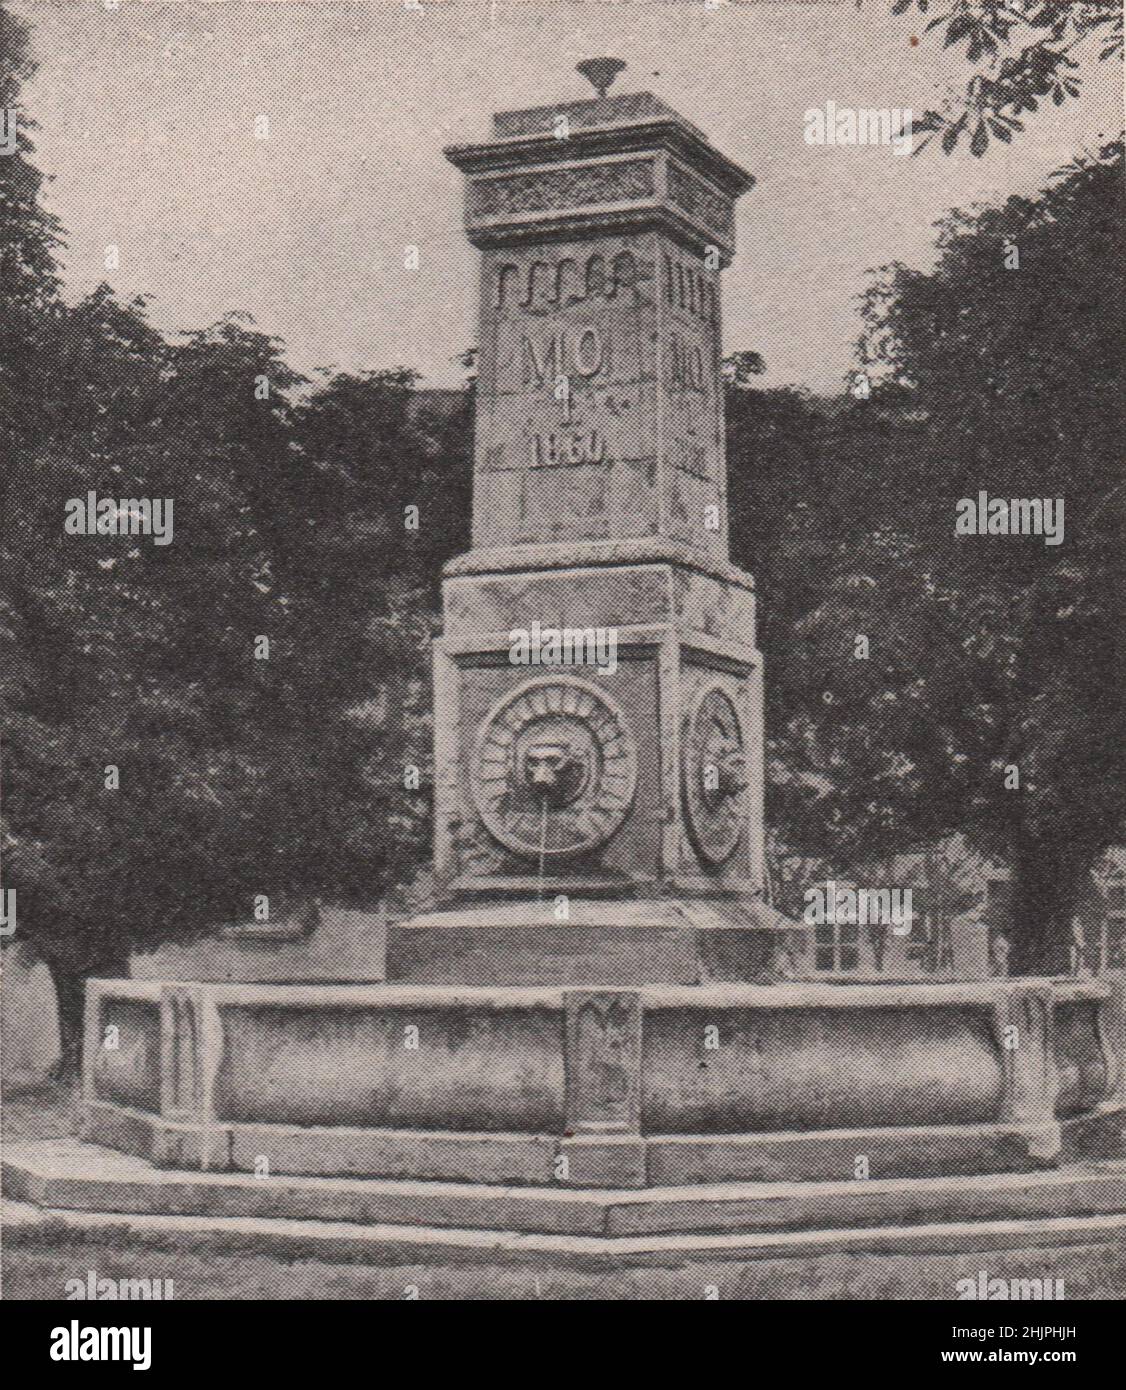 Prince Michael's well. Serbia. Belgrade (1923) Stock Photo